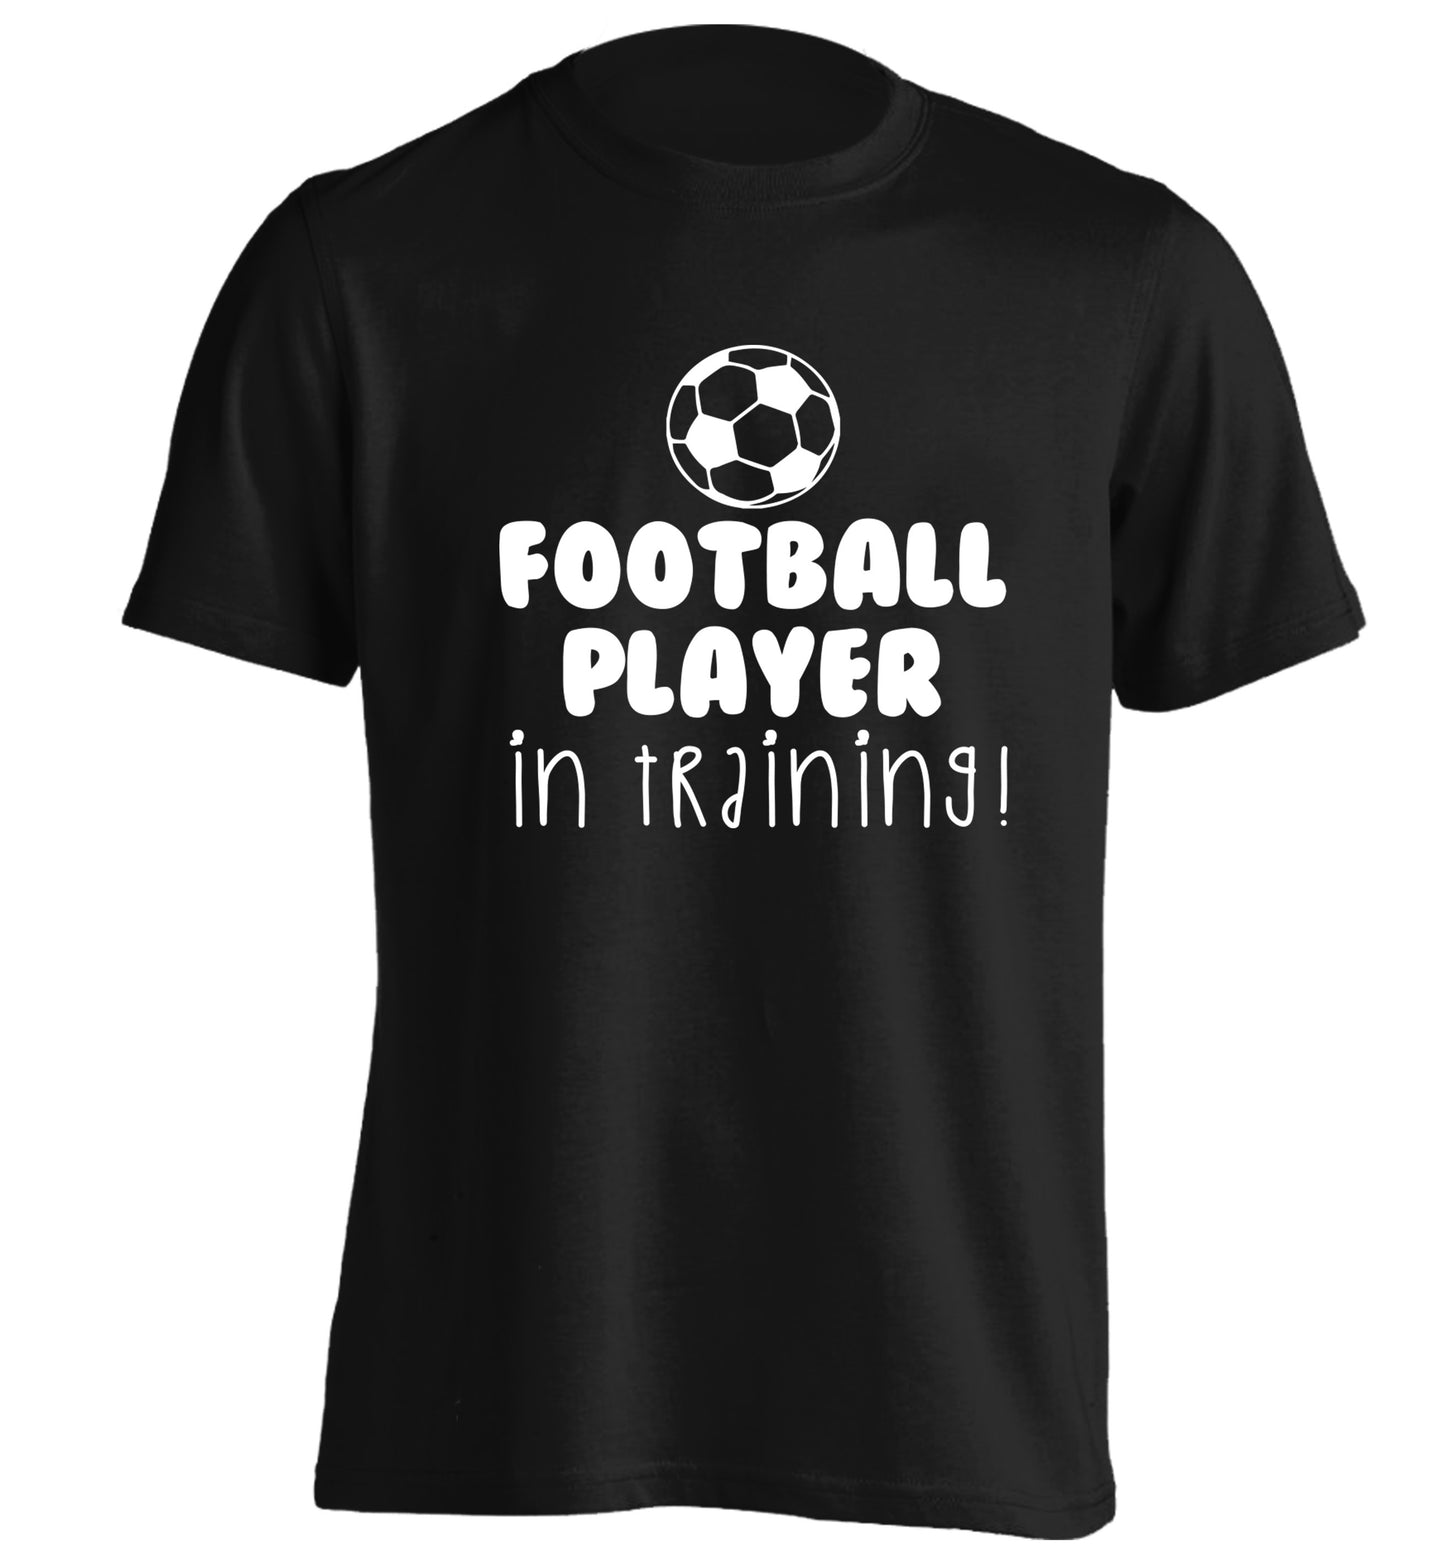 Football player in training adults unisex black Tshirt 2XL